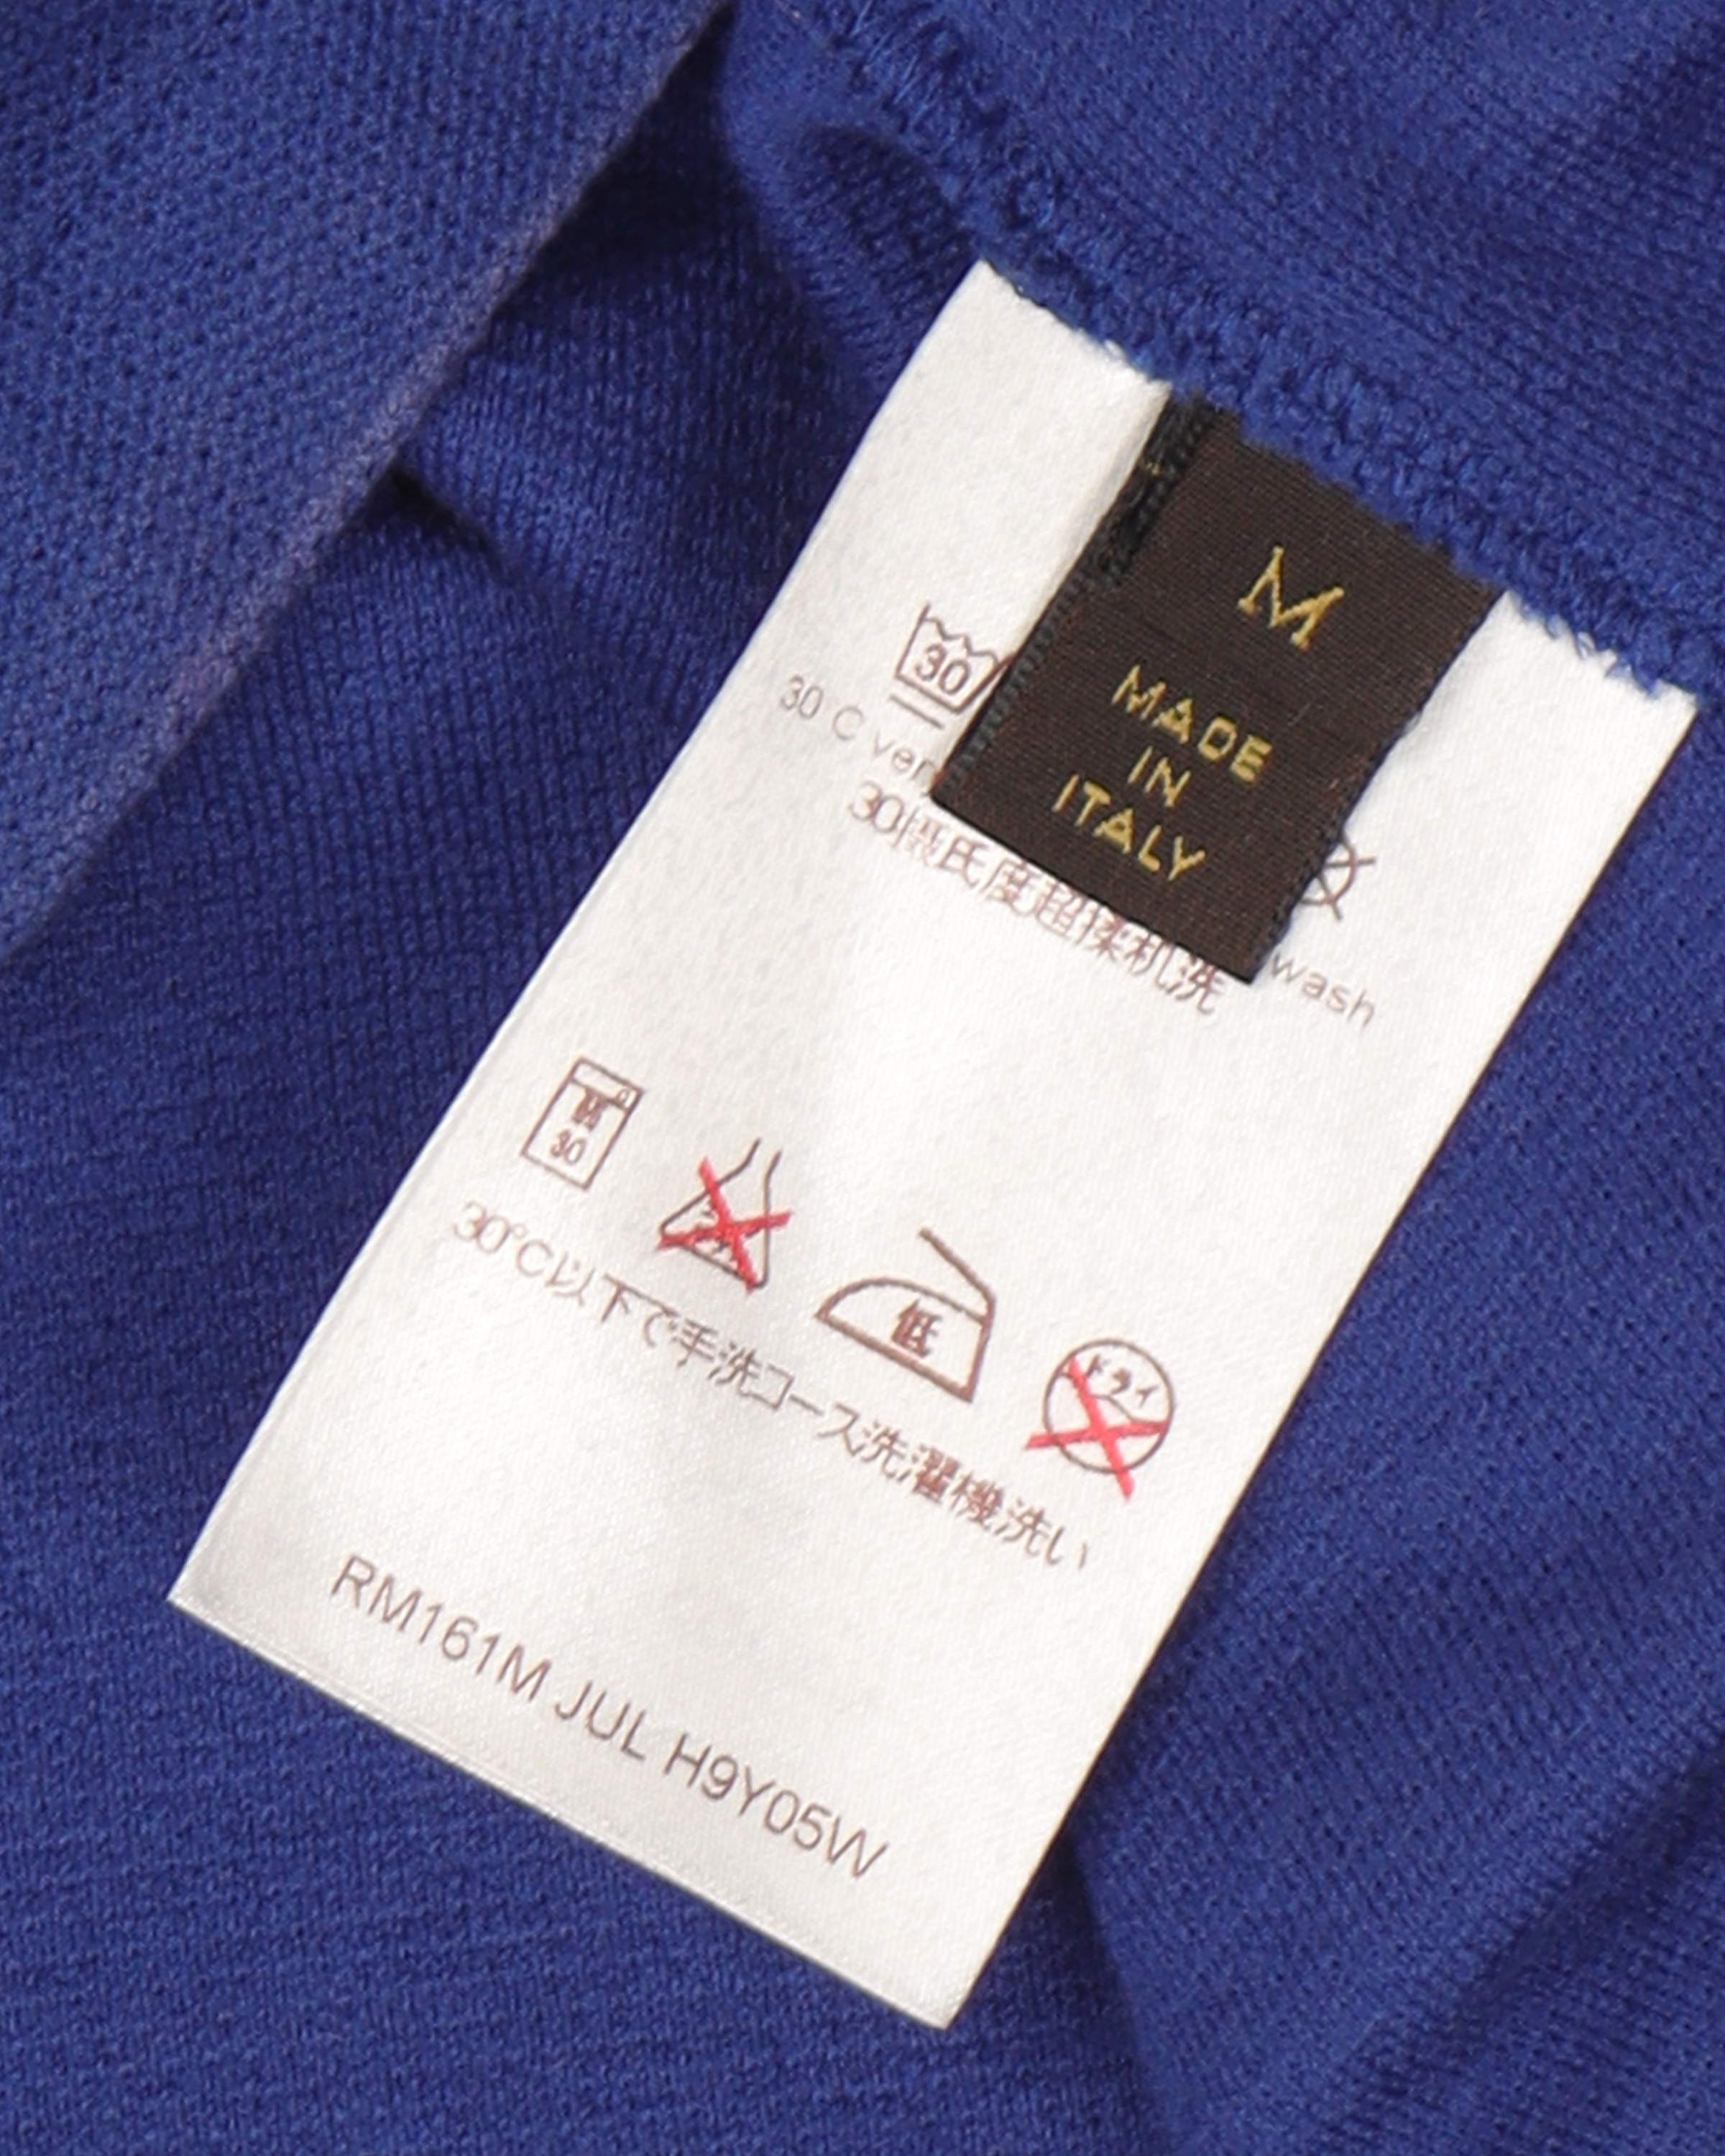 Louis Vuitton Oversize Reflective Logo T-Shirt w/ Tags - Blue T